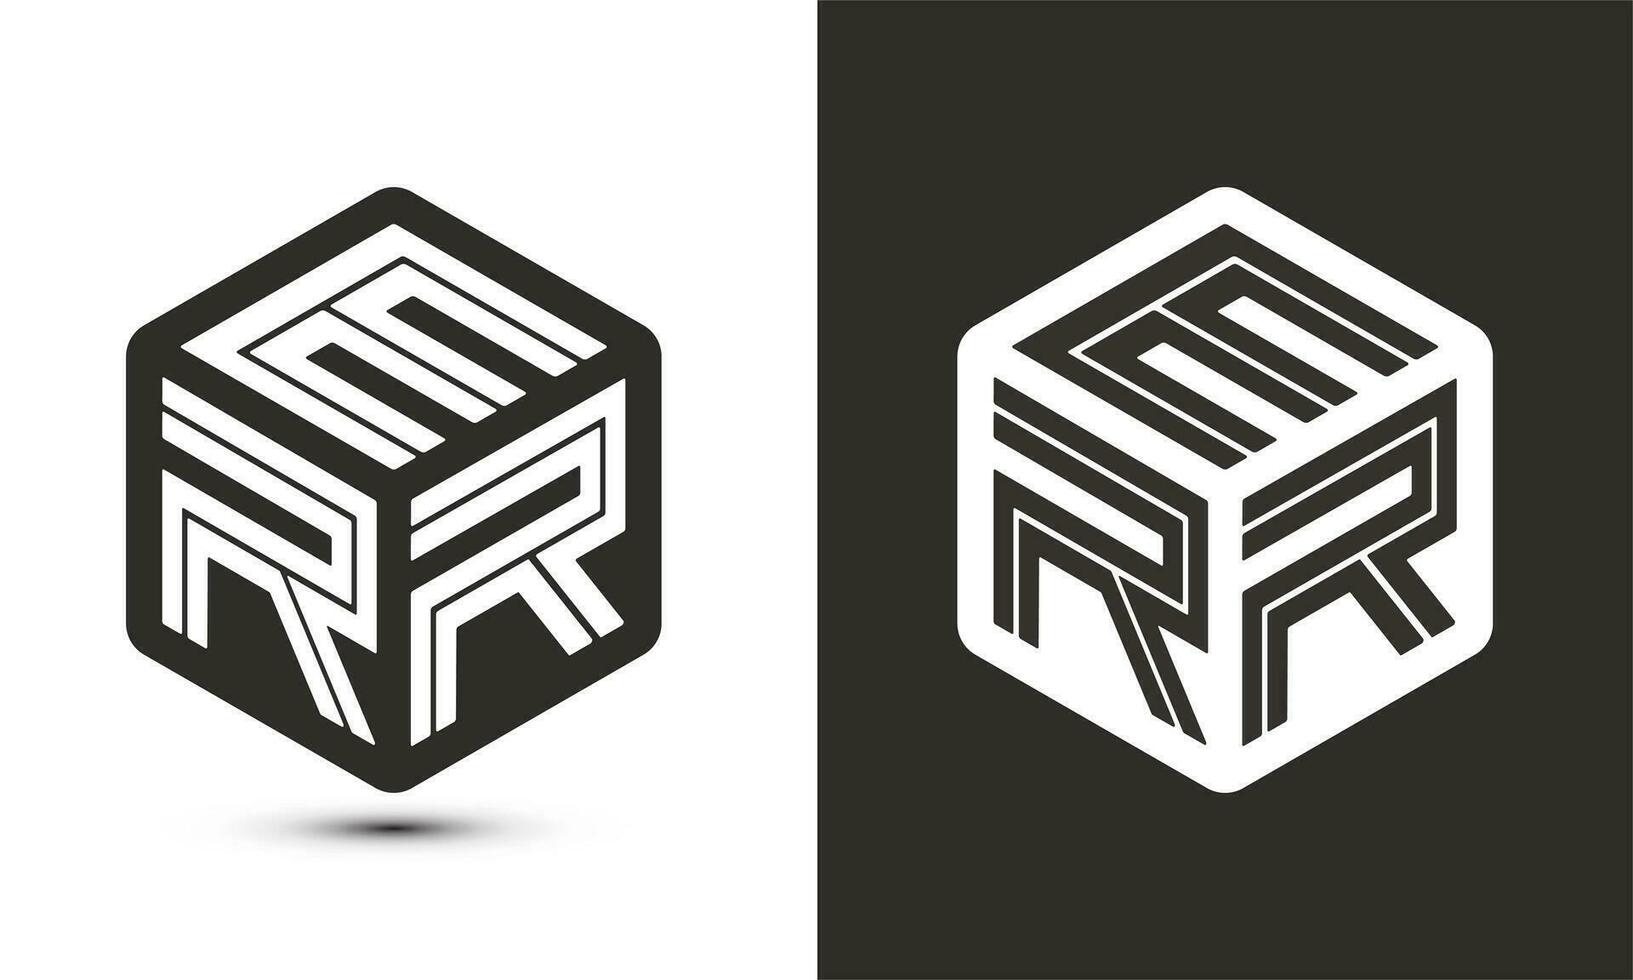 errar letra logo diseño con ilustrador cubo logo, vector logo moderno alfabeto fuente superposición estilo.